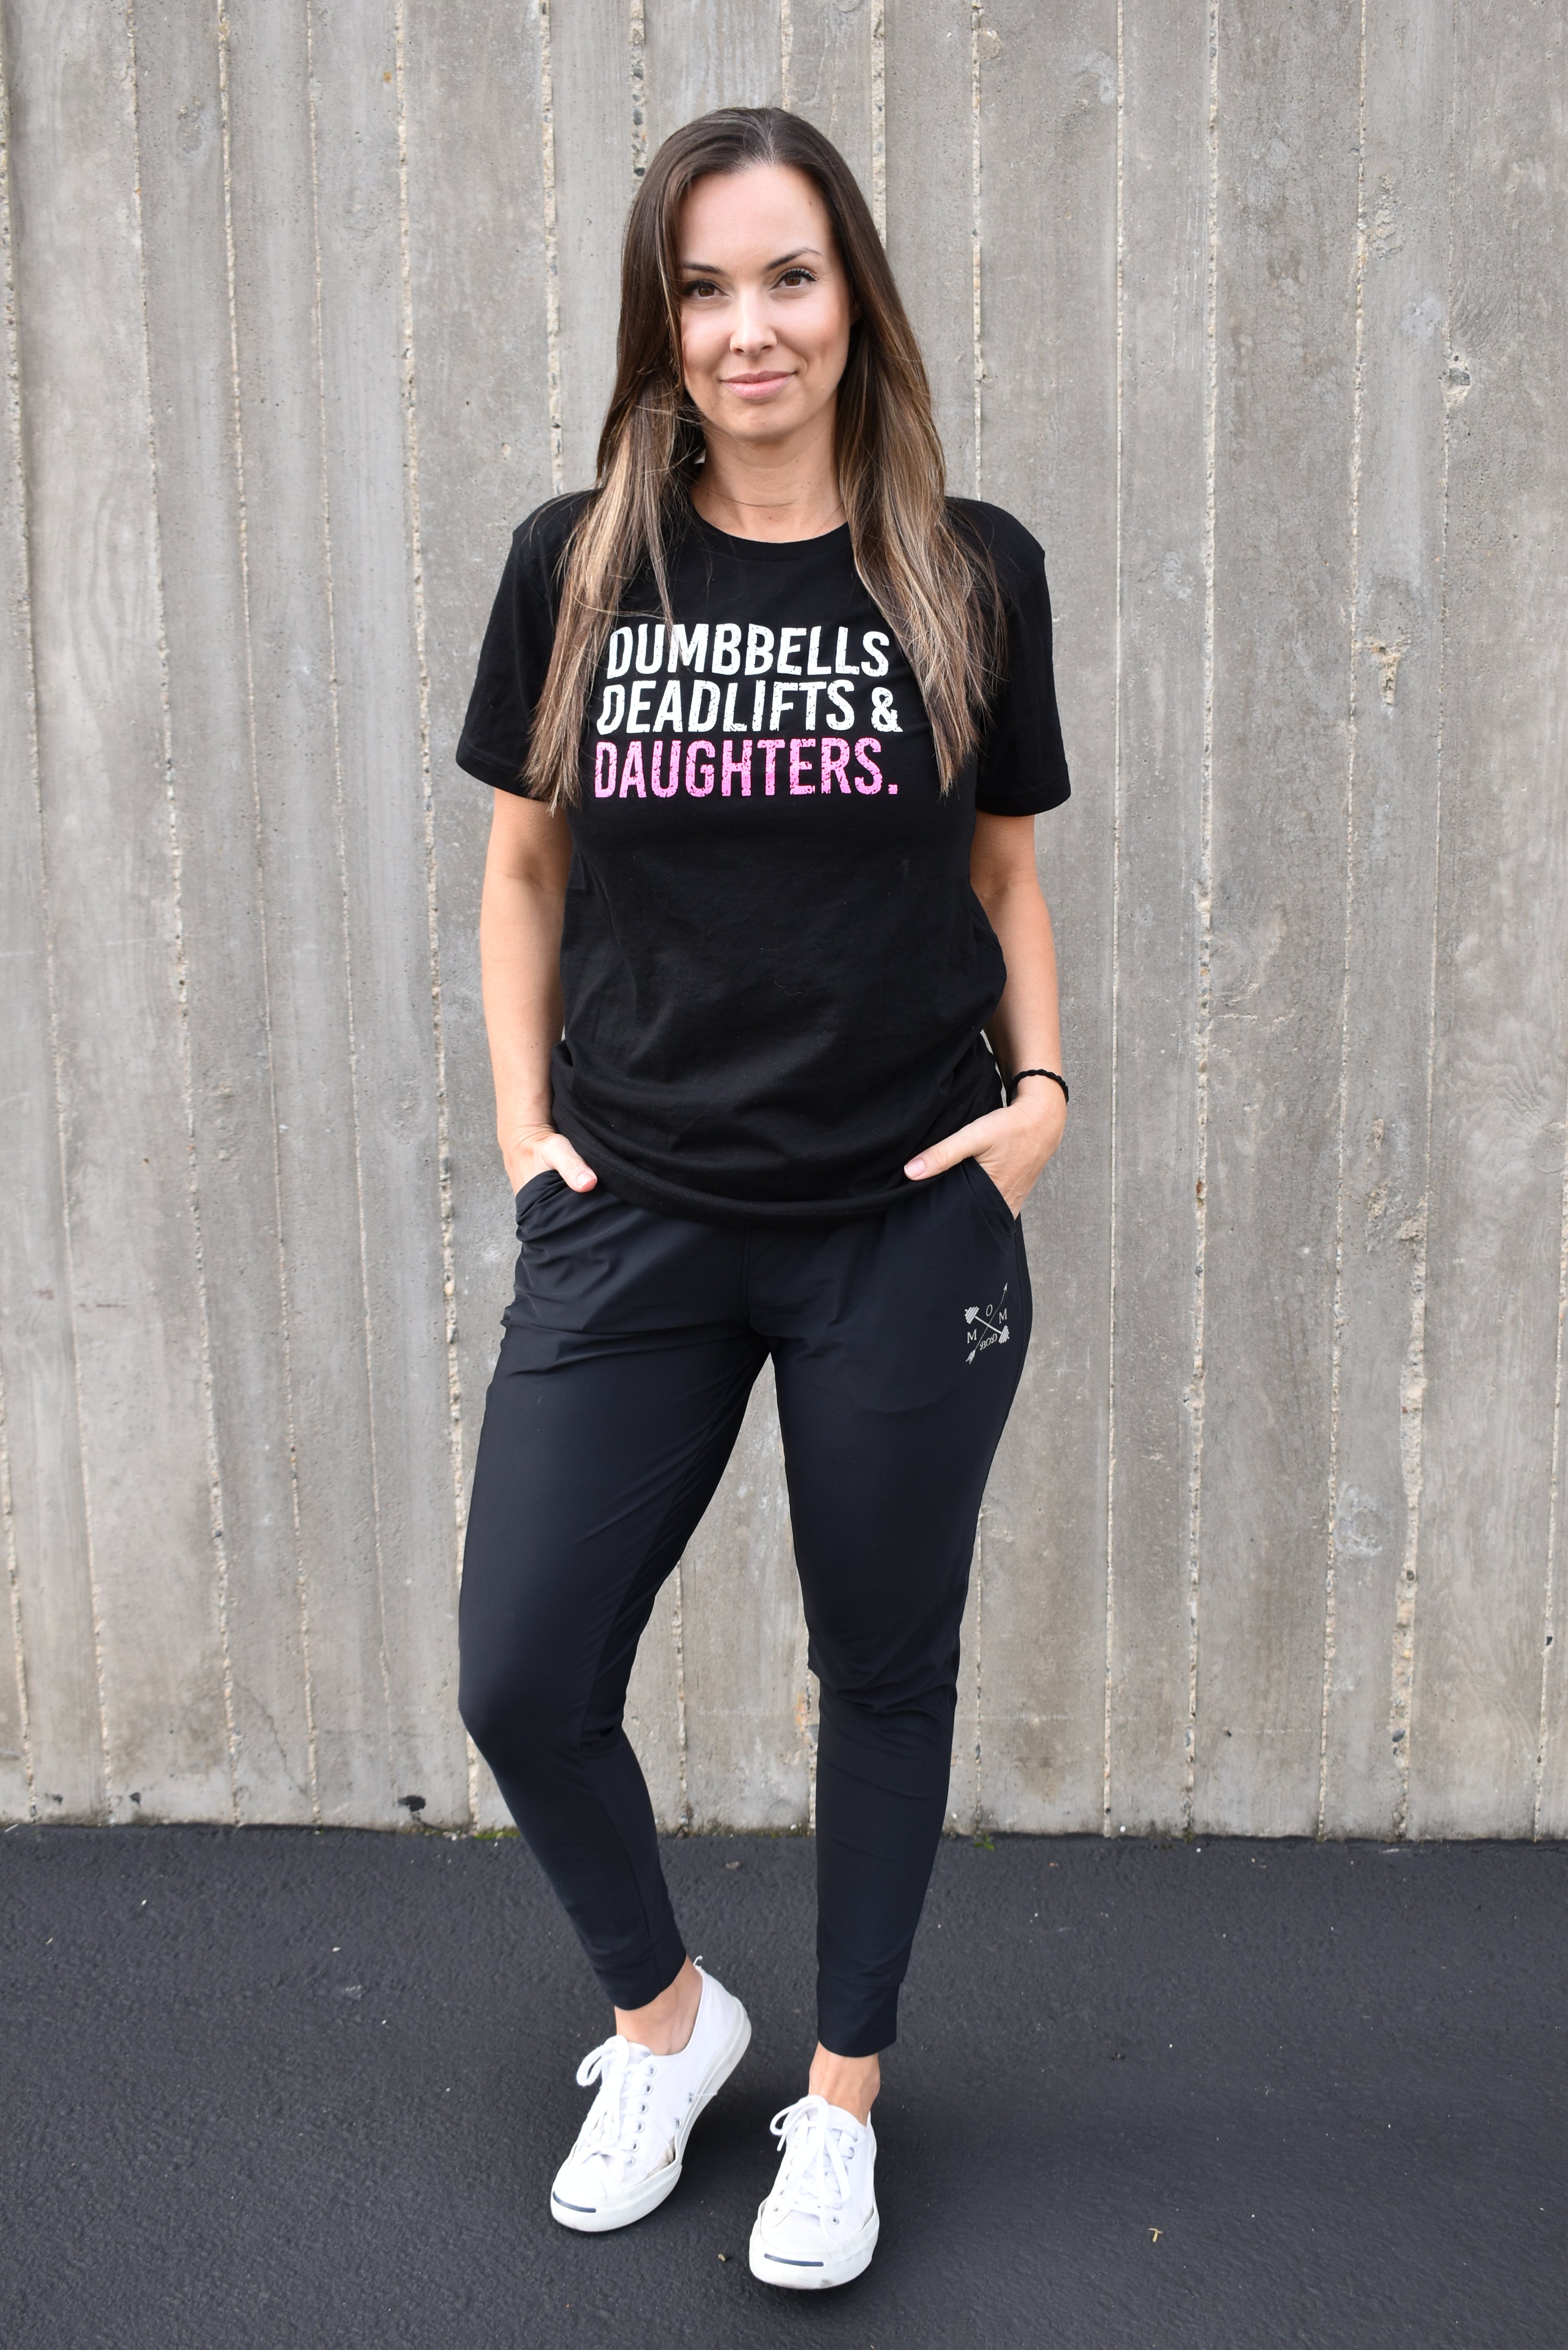 Dumbbells Deadlifts & Daughters (Girl Mom) - Standard Length Shirt